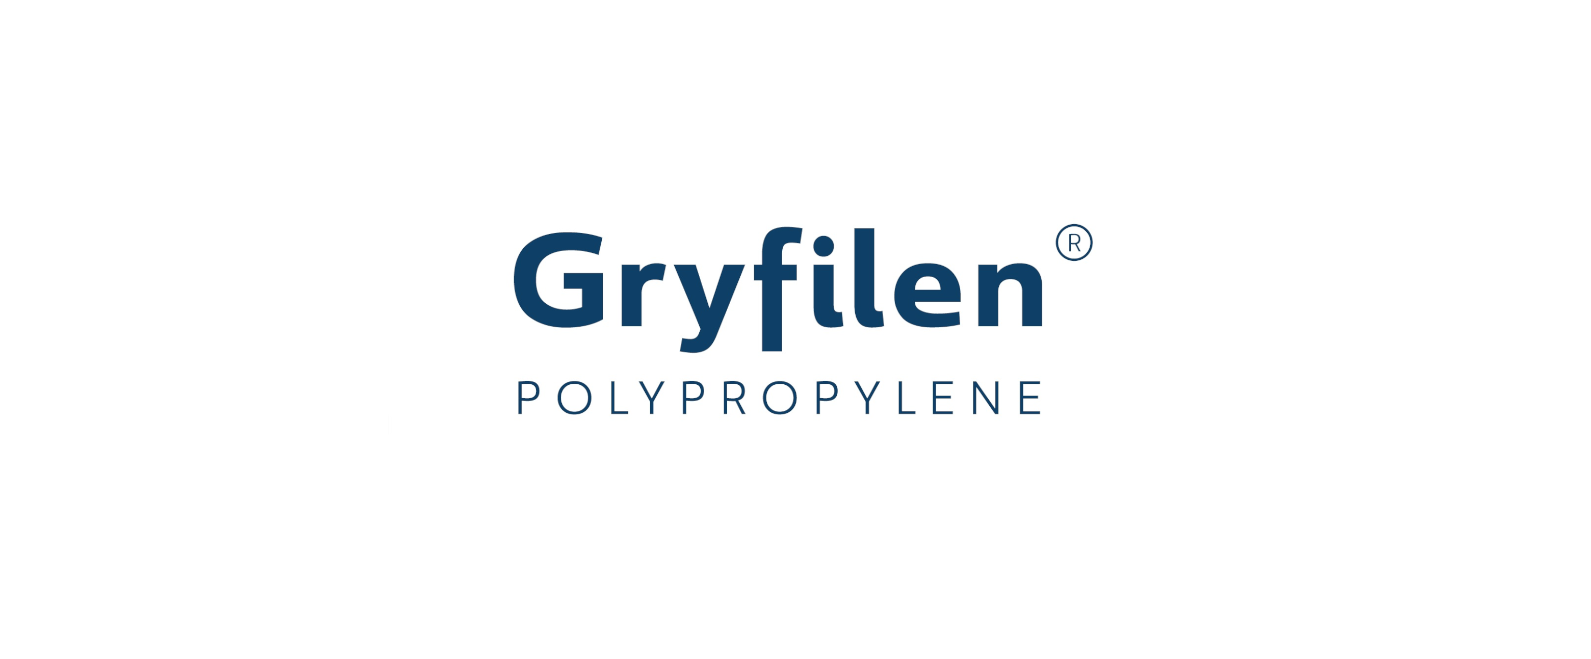 Grupa Azoty Polyolefins S.A. new brand name for polypropylene is Gryfilen